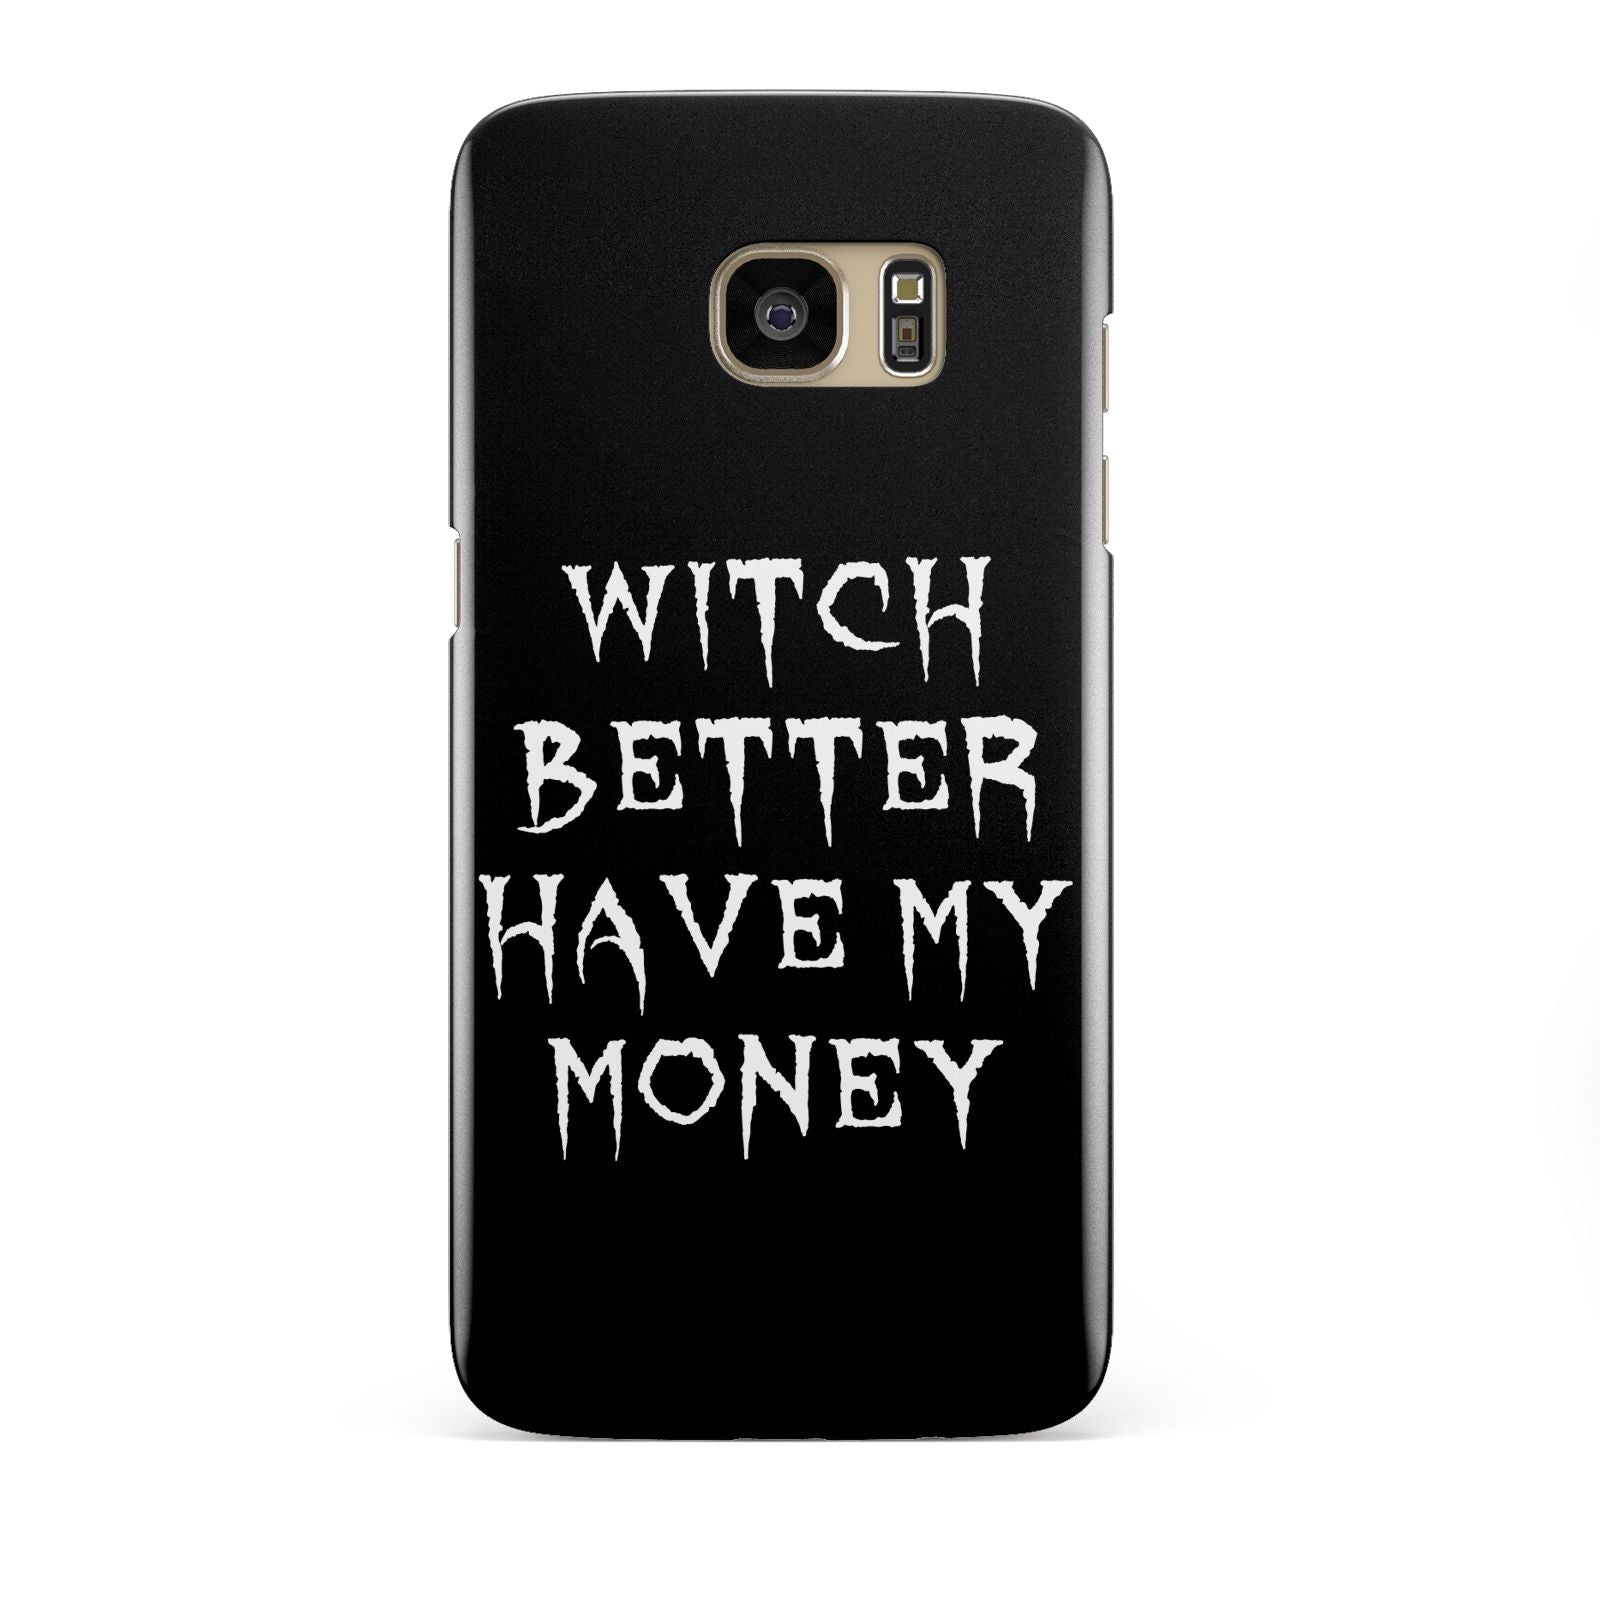 Witch Better Have My Money Samsung Galaxy S7 Edge Case